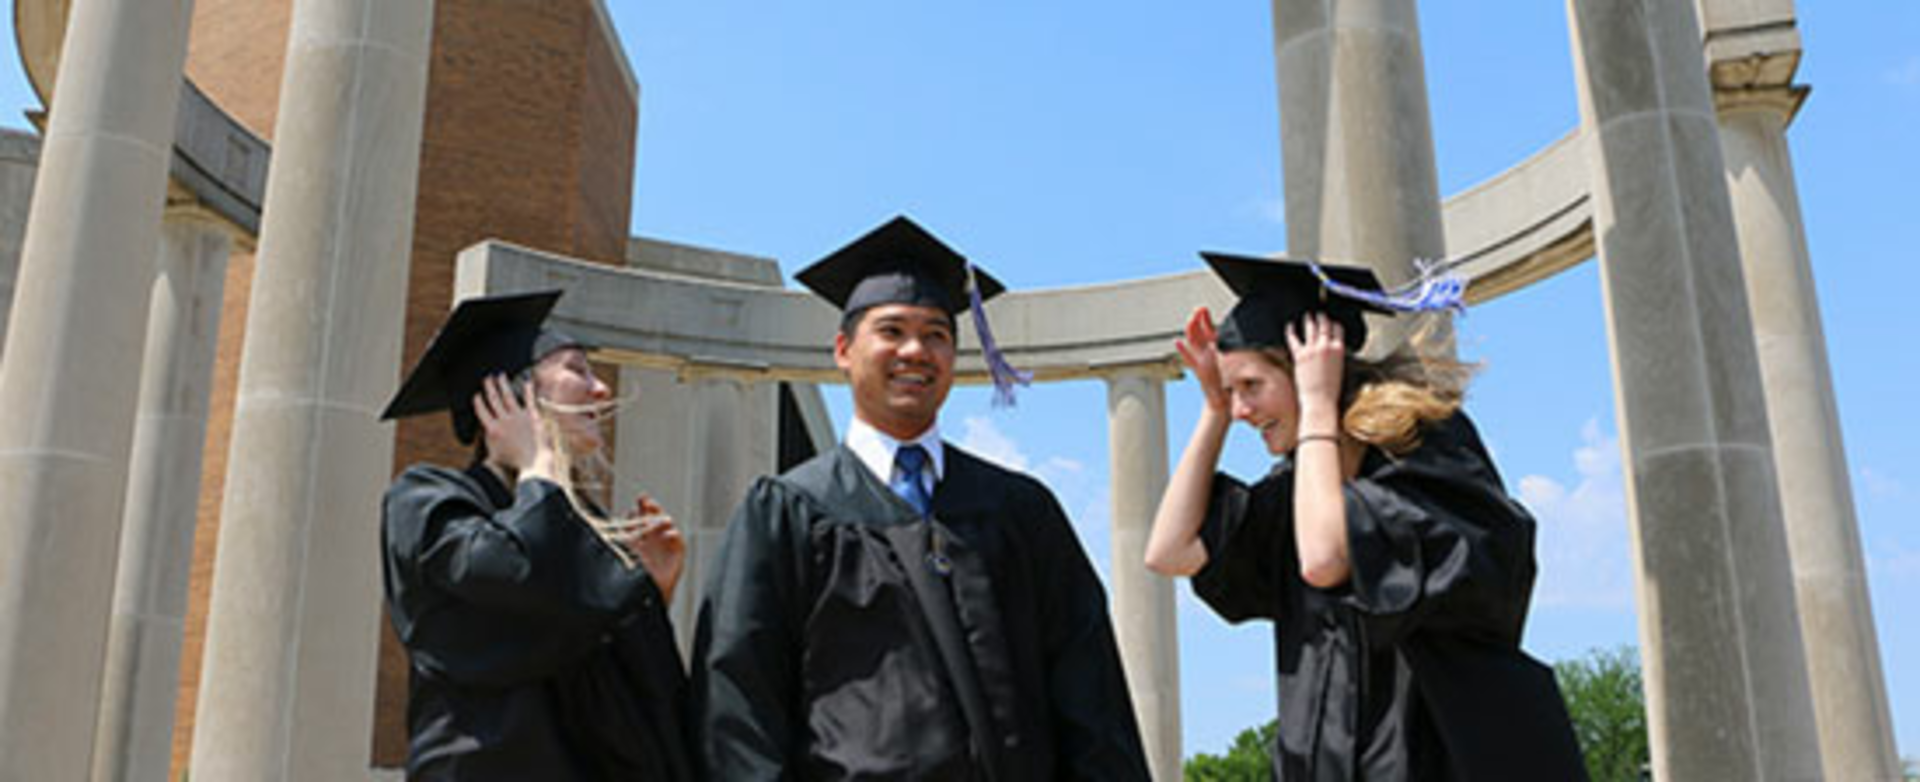 Graduates at the Colonnade